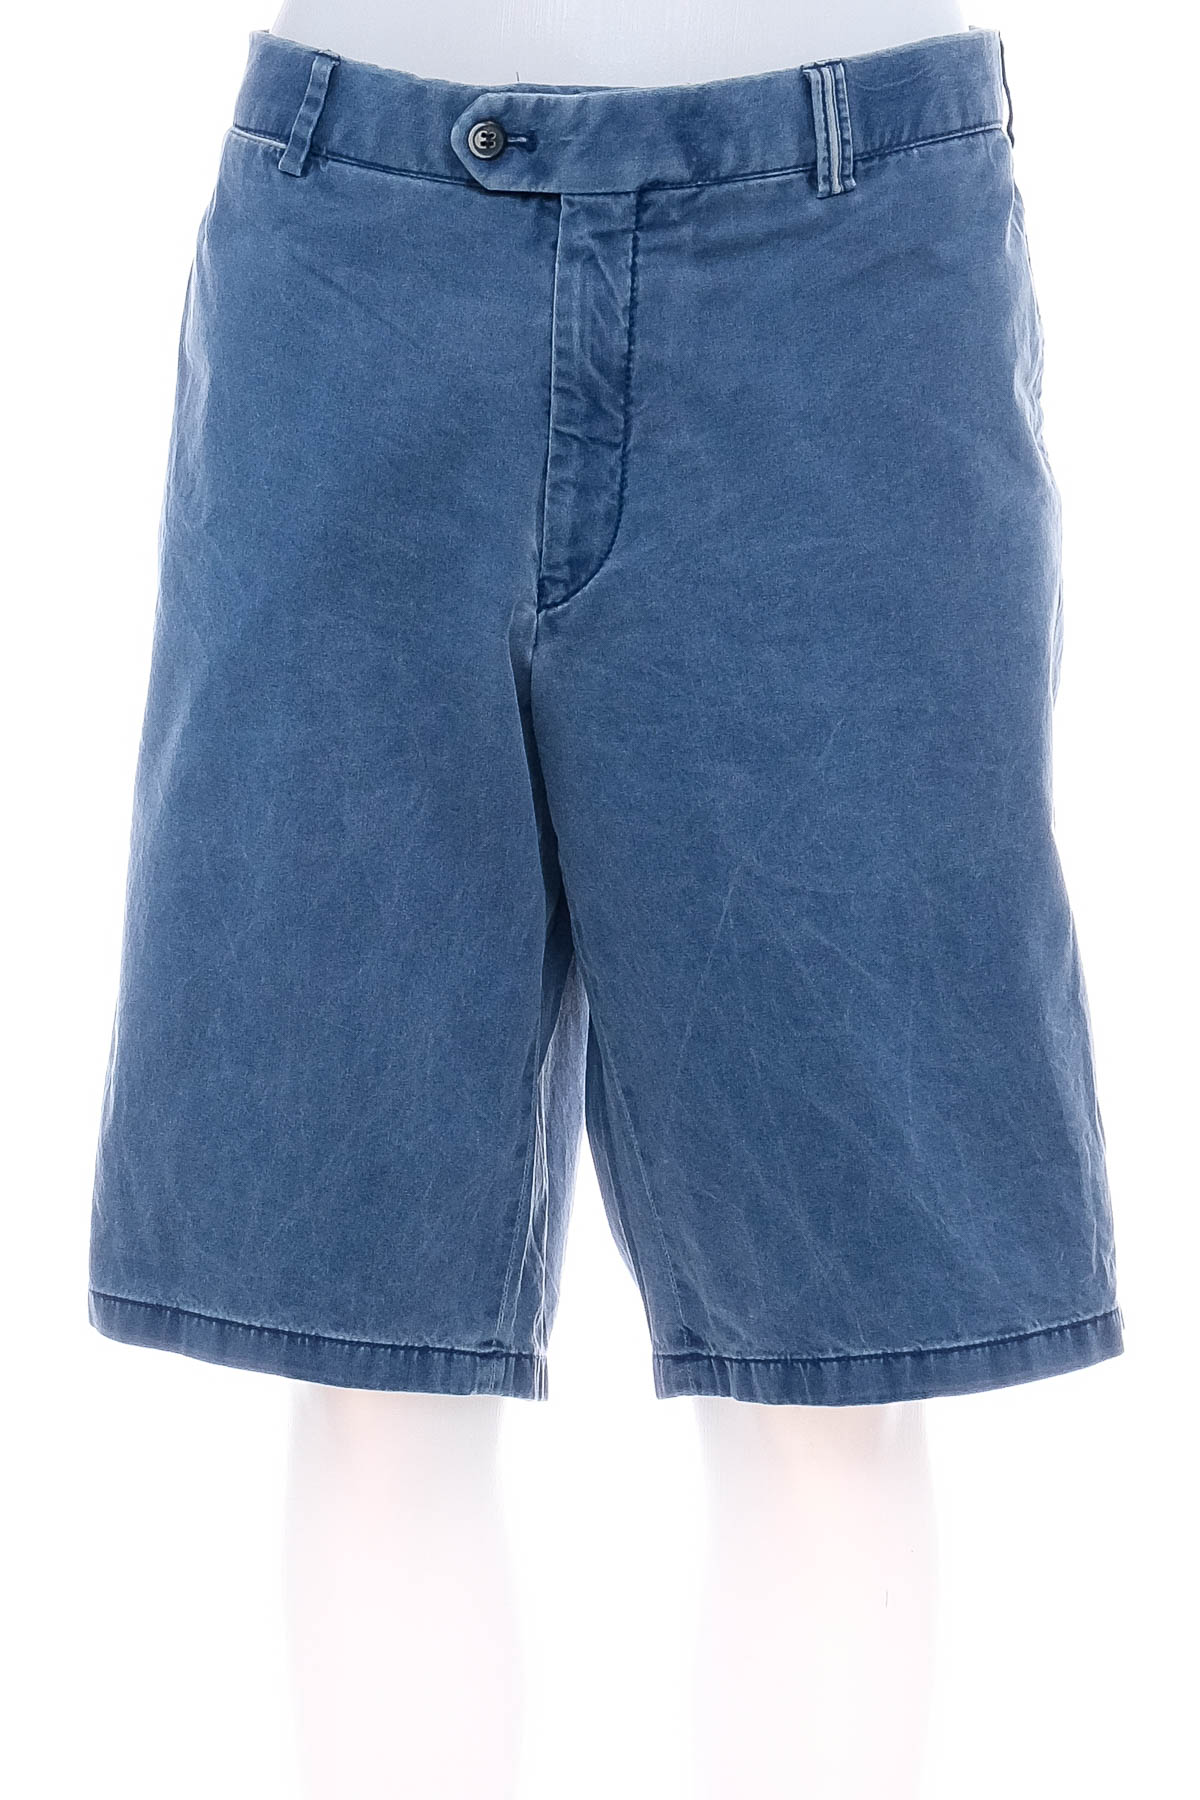 Men's shorts - Hiltl - 0